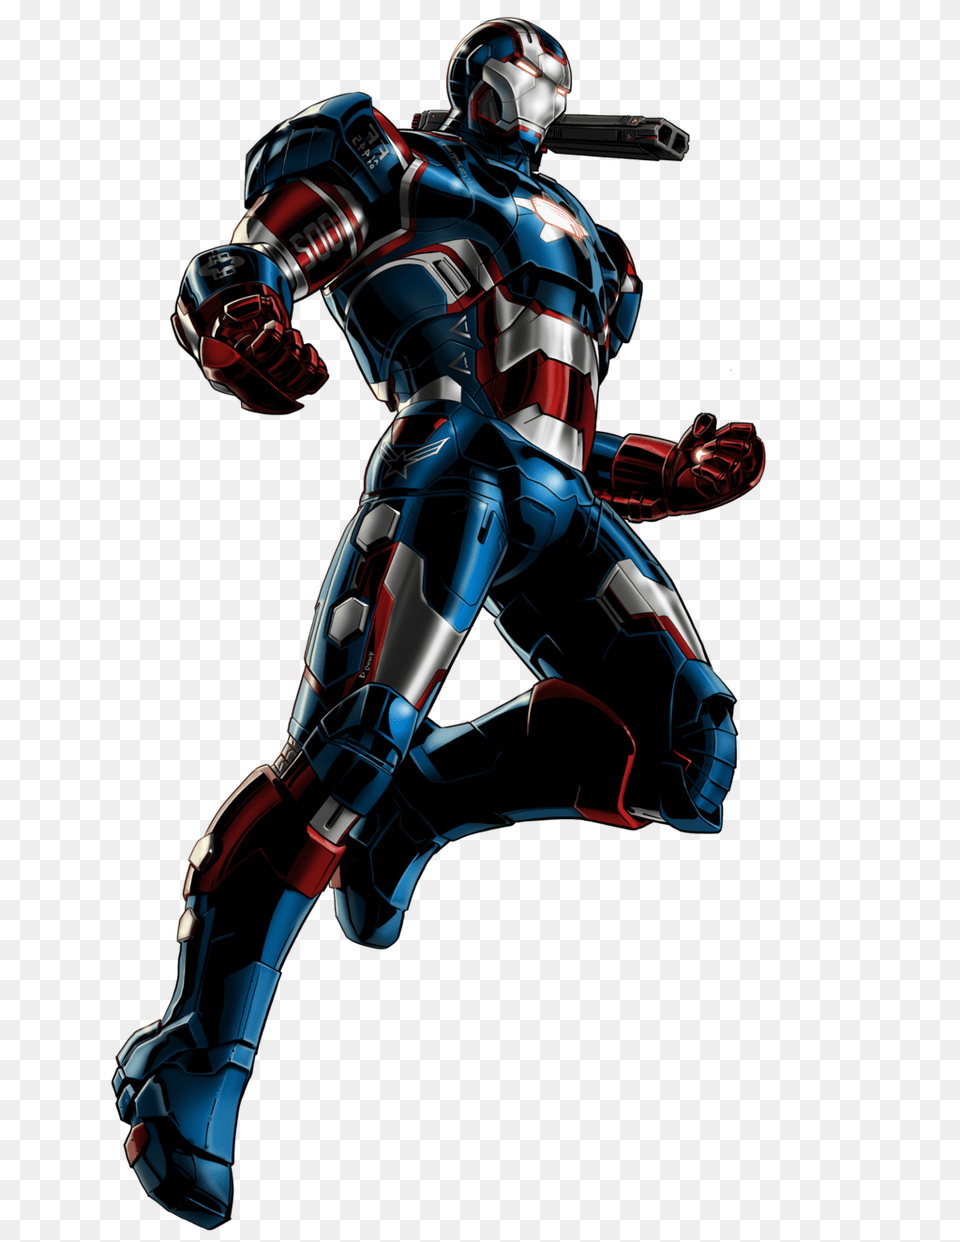 Marvel Avengers Alliance War Machine Iron Patr, Helmet, Adult, Male, Man Png Image